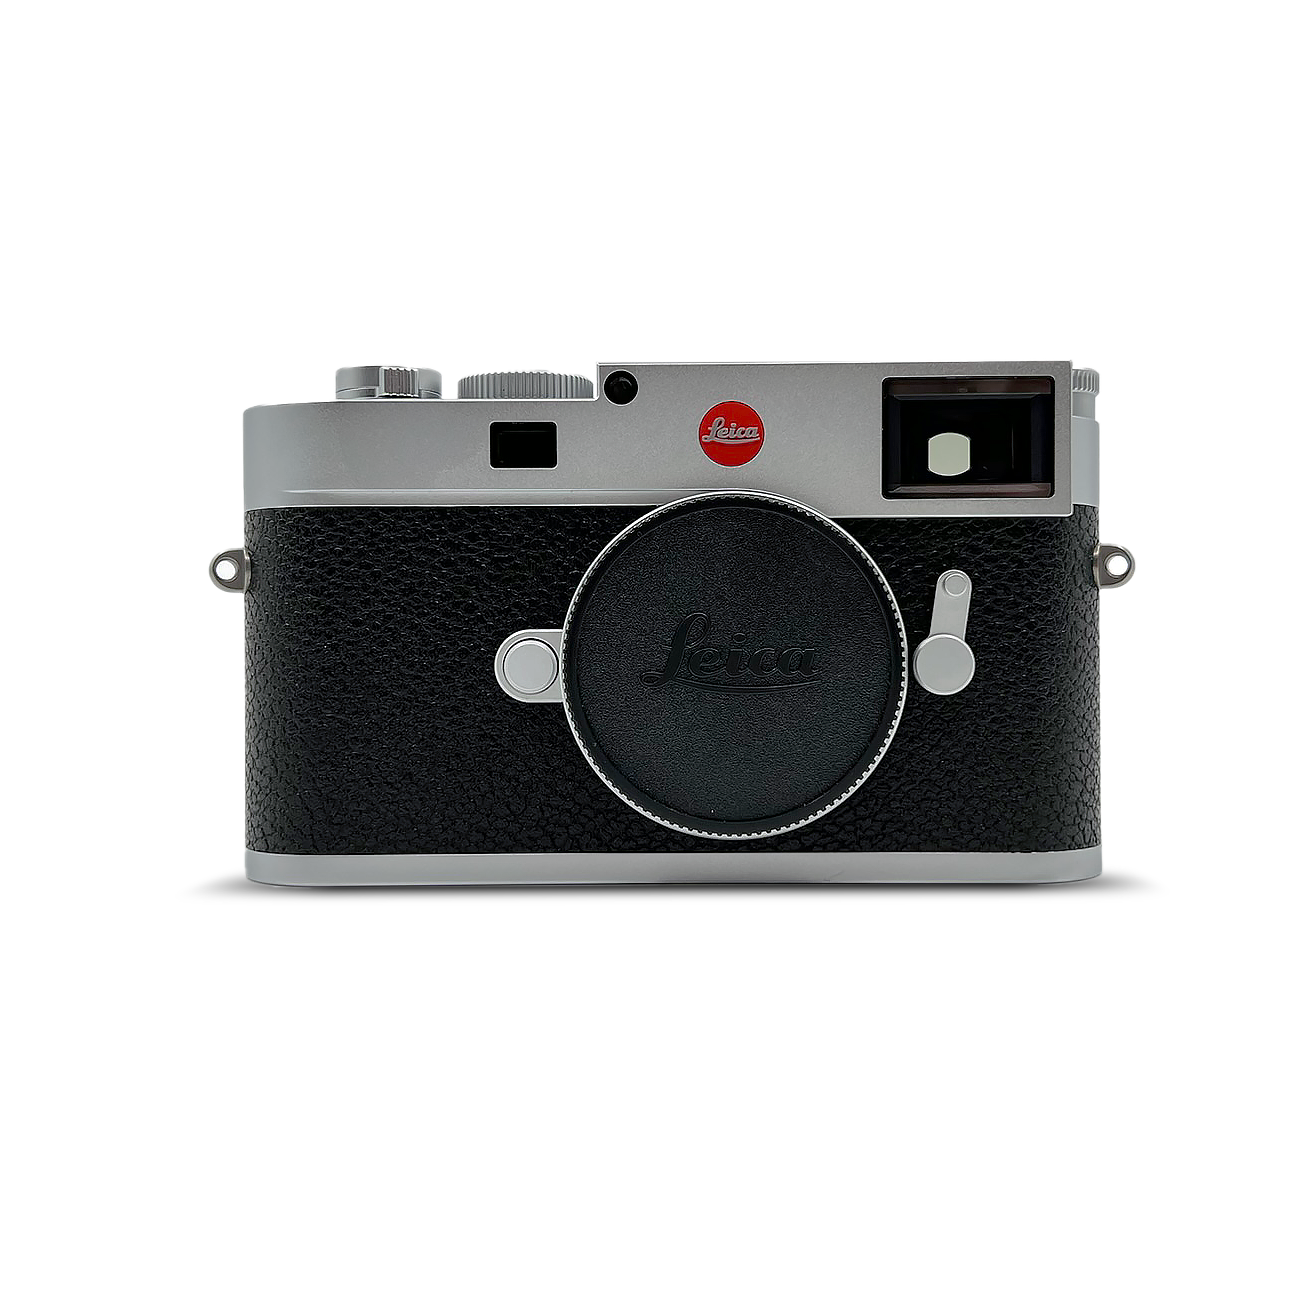 Leica M11 Digital Rangefinder Camera (Silver) - image 1 of 5